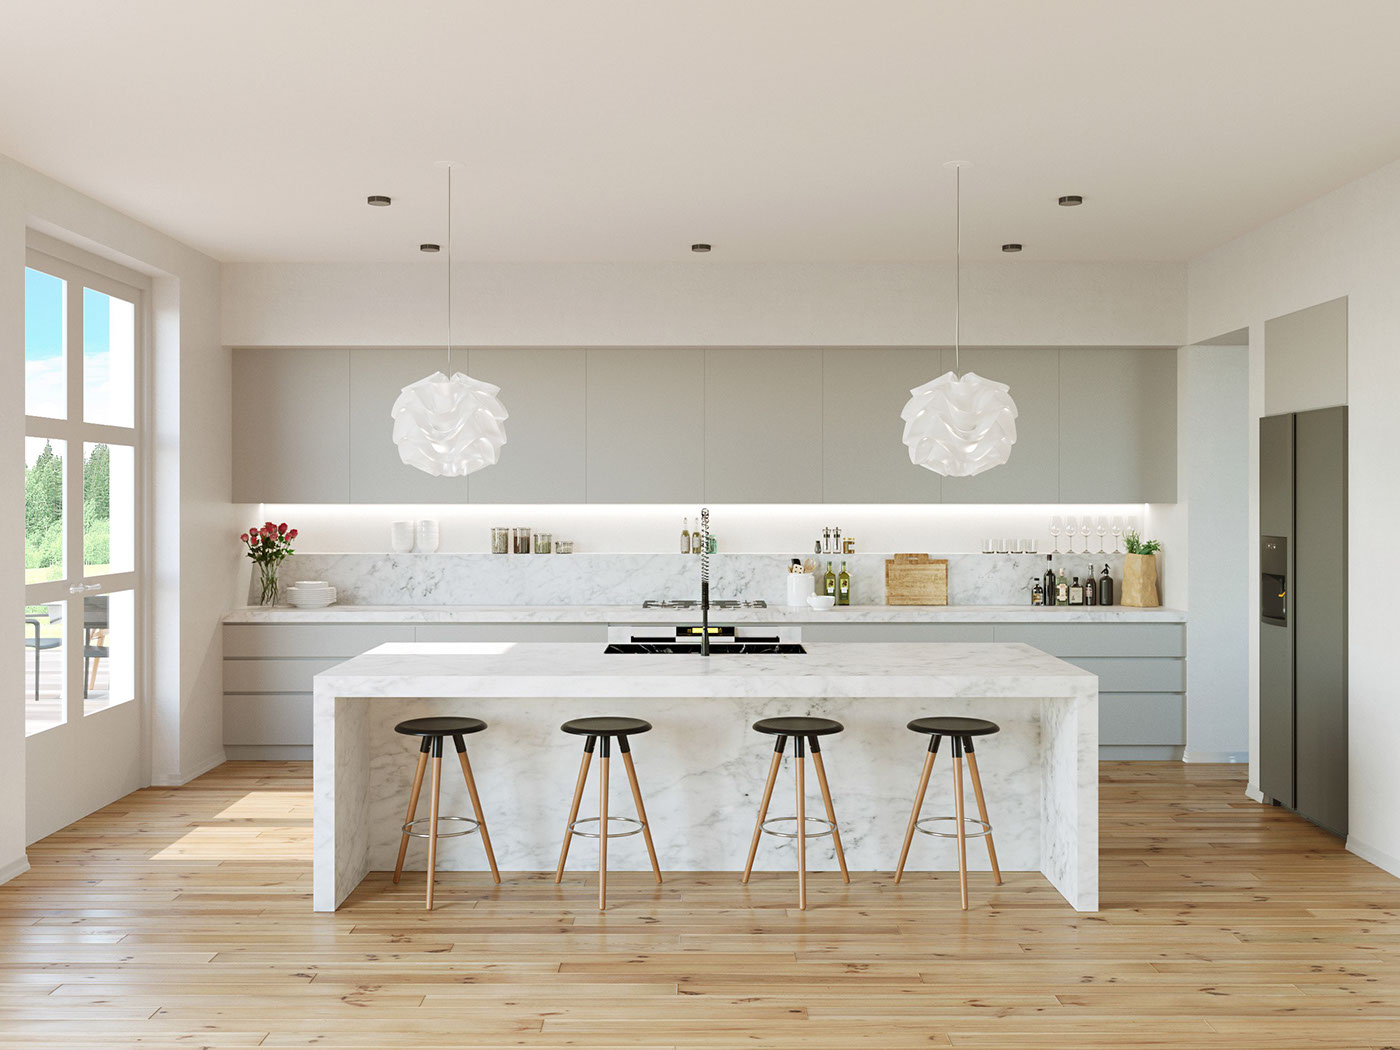 visualization of kitchen interior on Behance